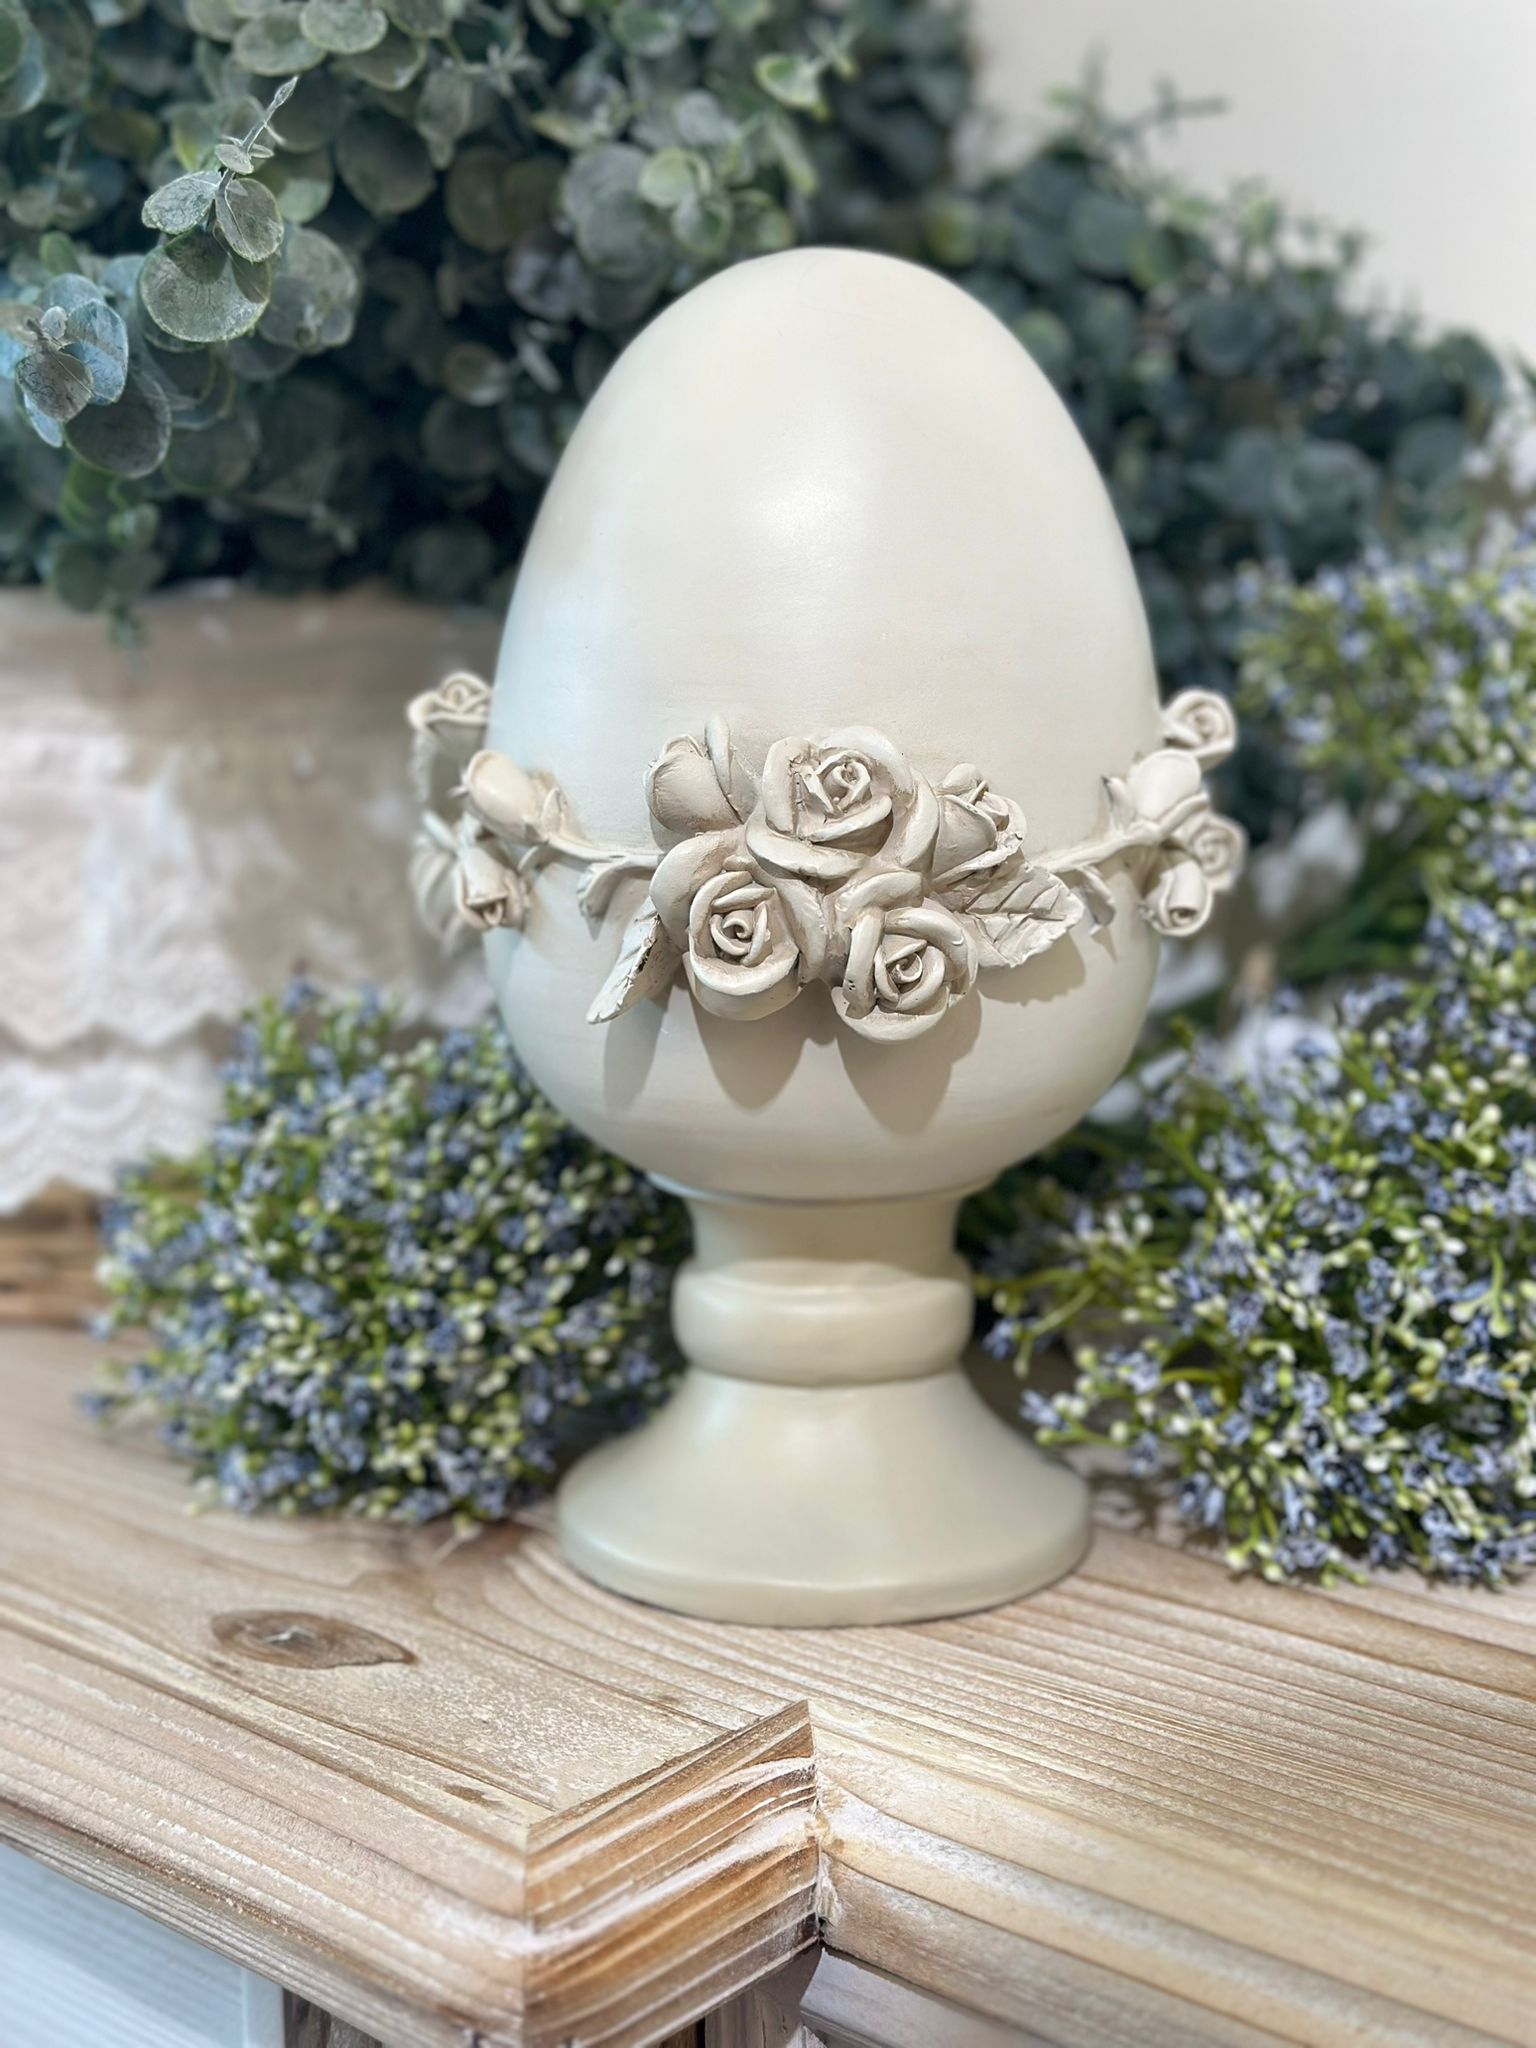 Uovo in resina con roselline - H. 25 cm - Preziosa